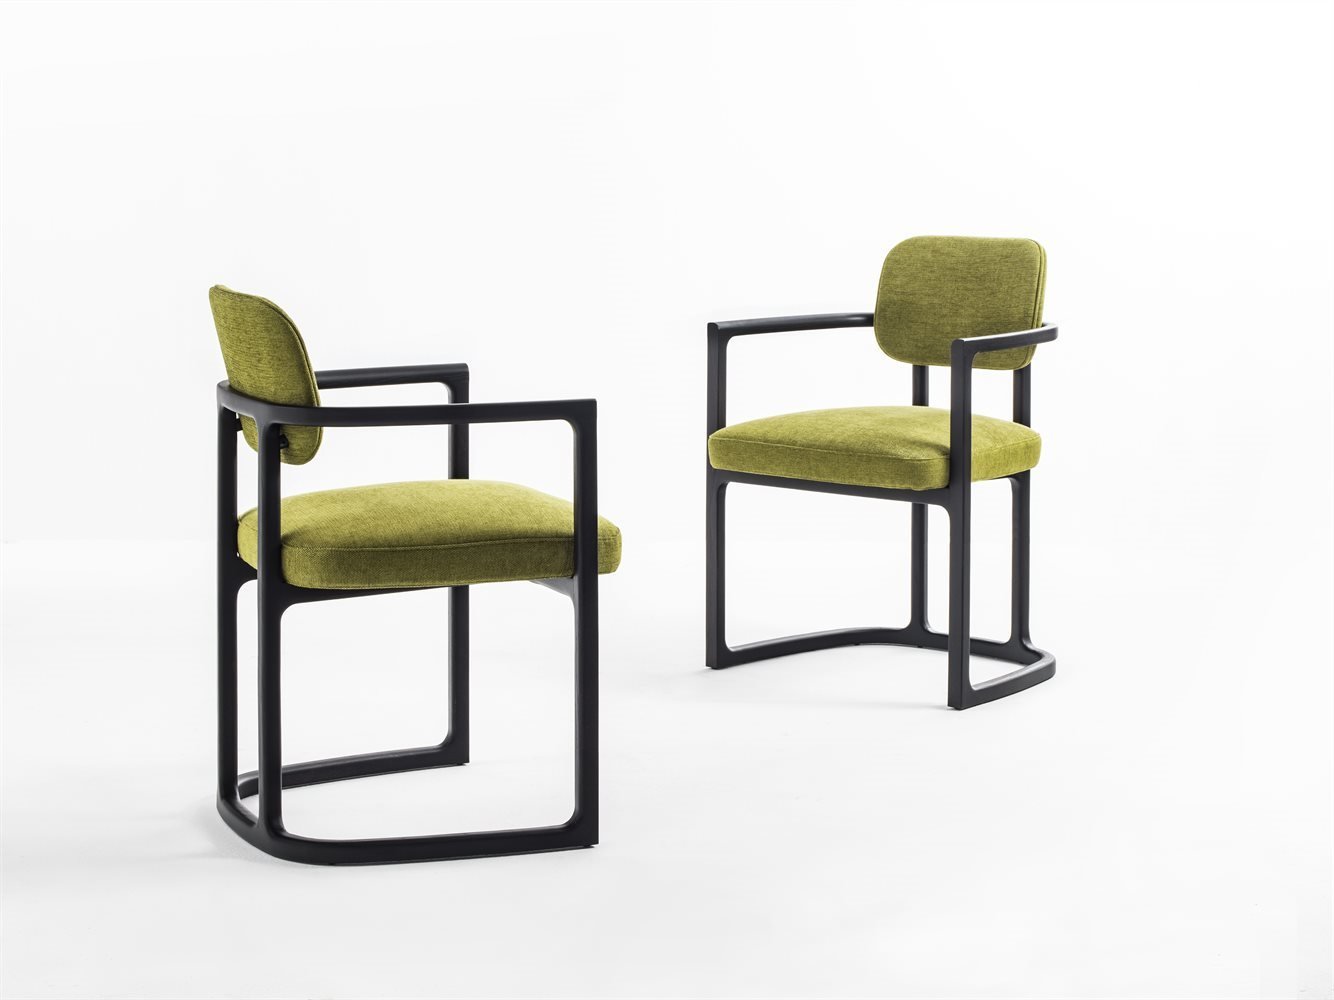 Serena Chair from Porada, designed by E. Gallina